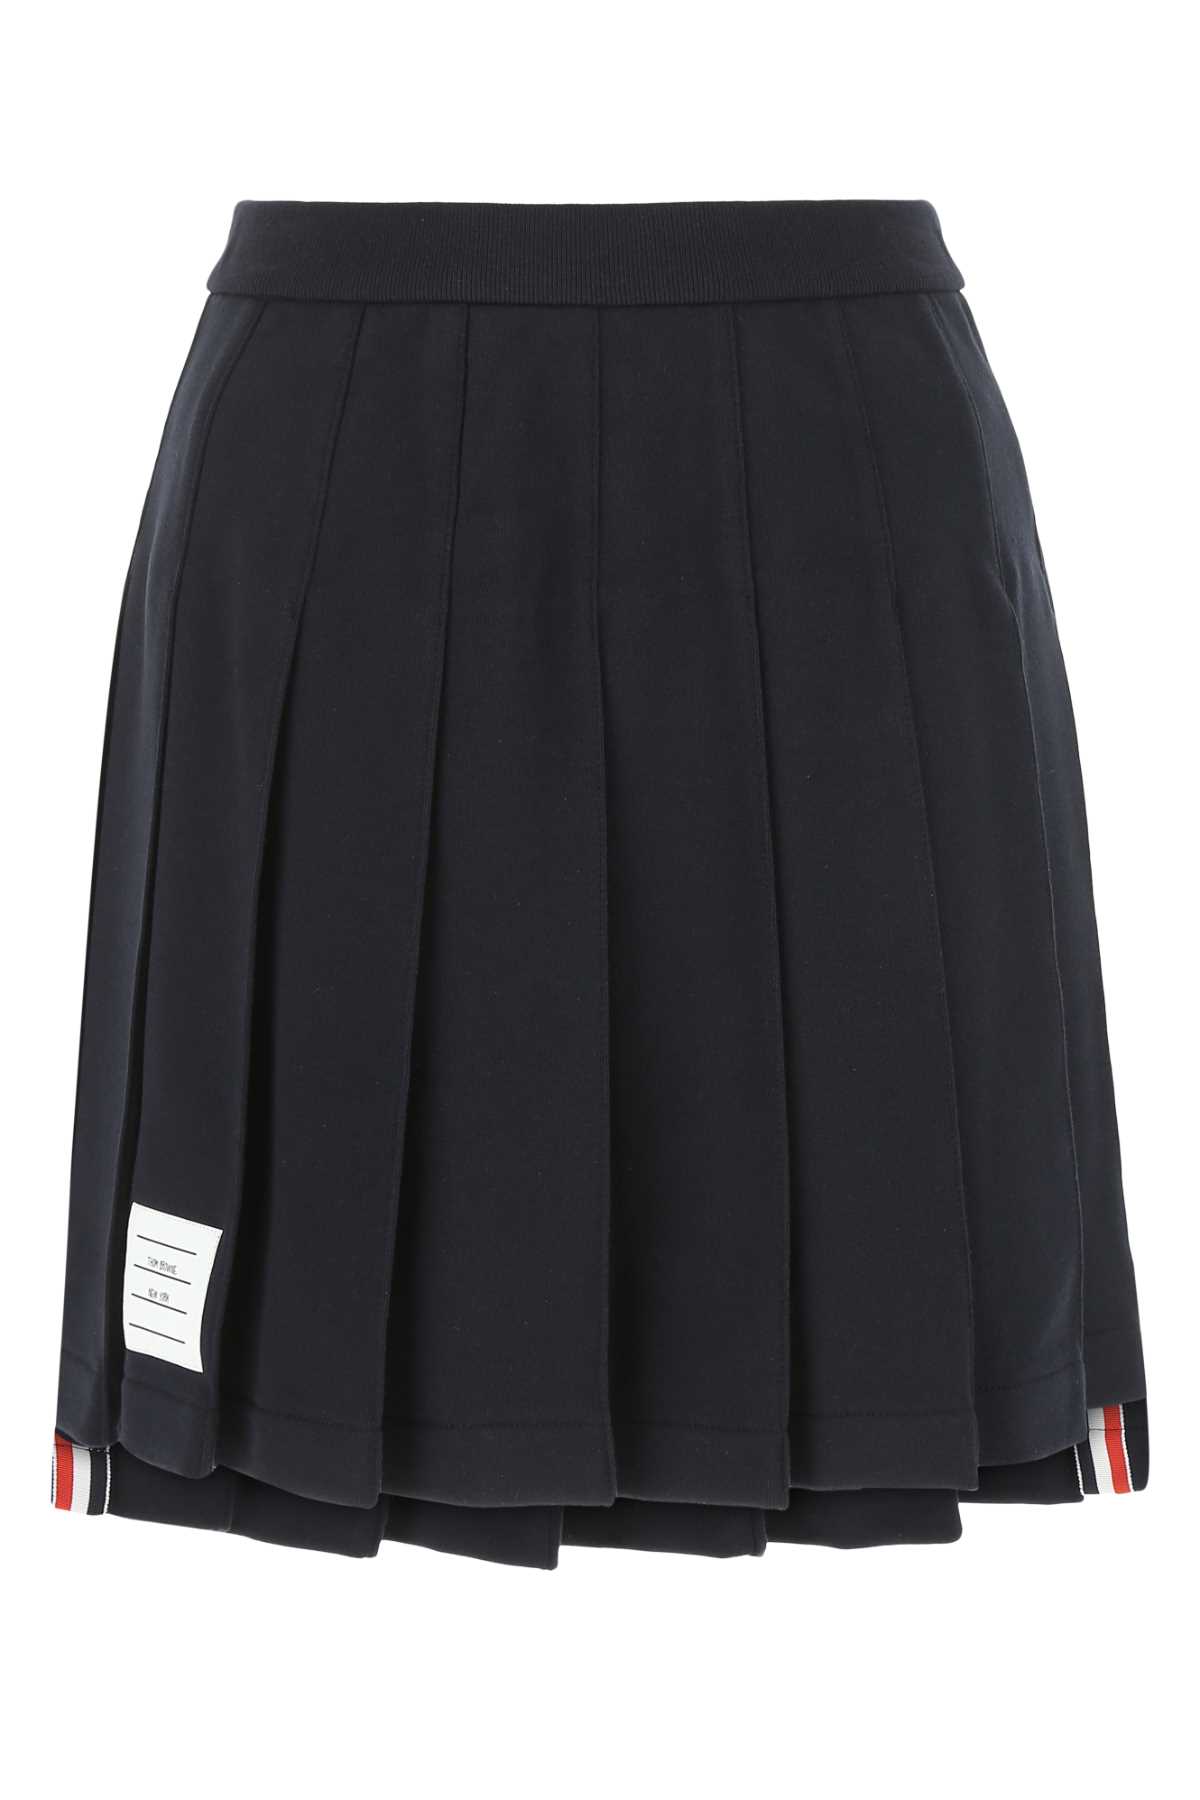 Thom Browne Navy Blue Cotton Mini Skirt In Black